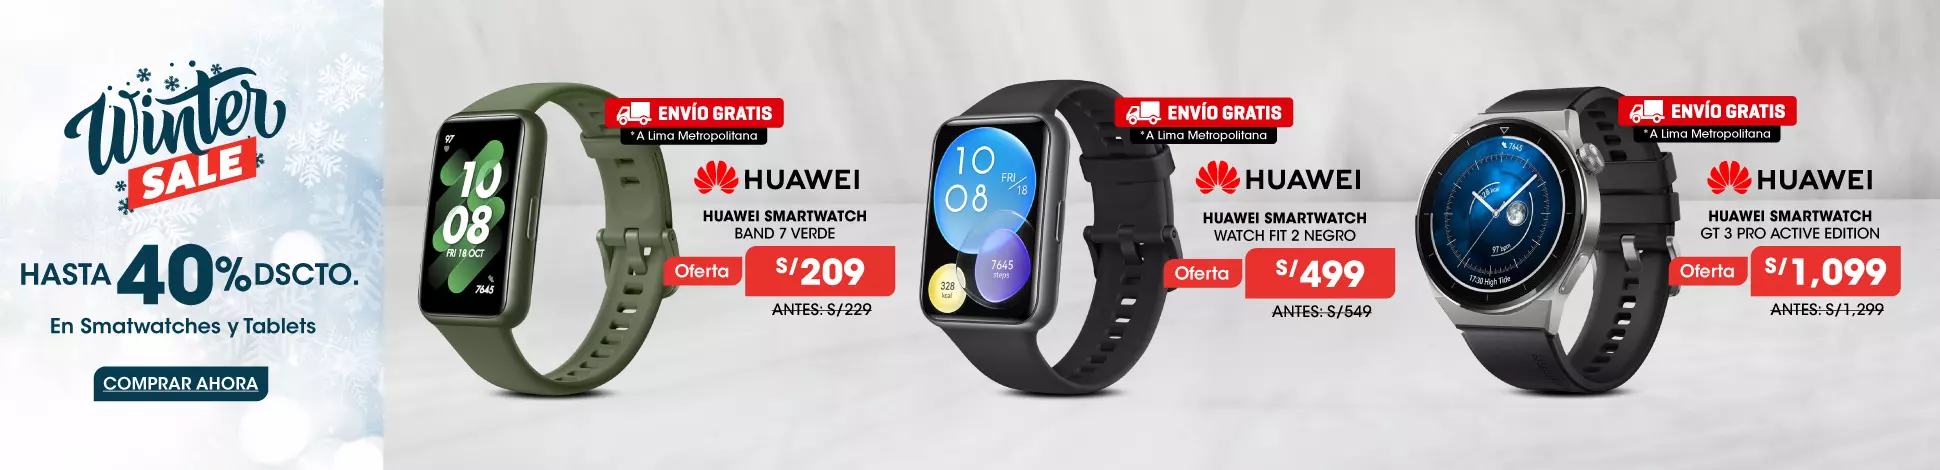 hs-deals-smartwatch.webp | Juntoz.com